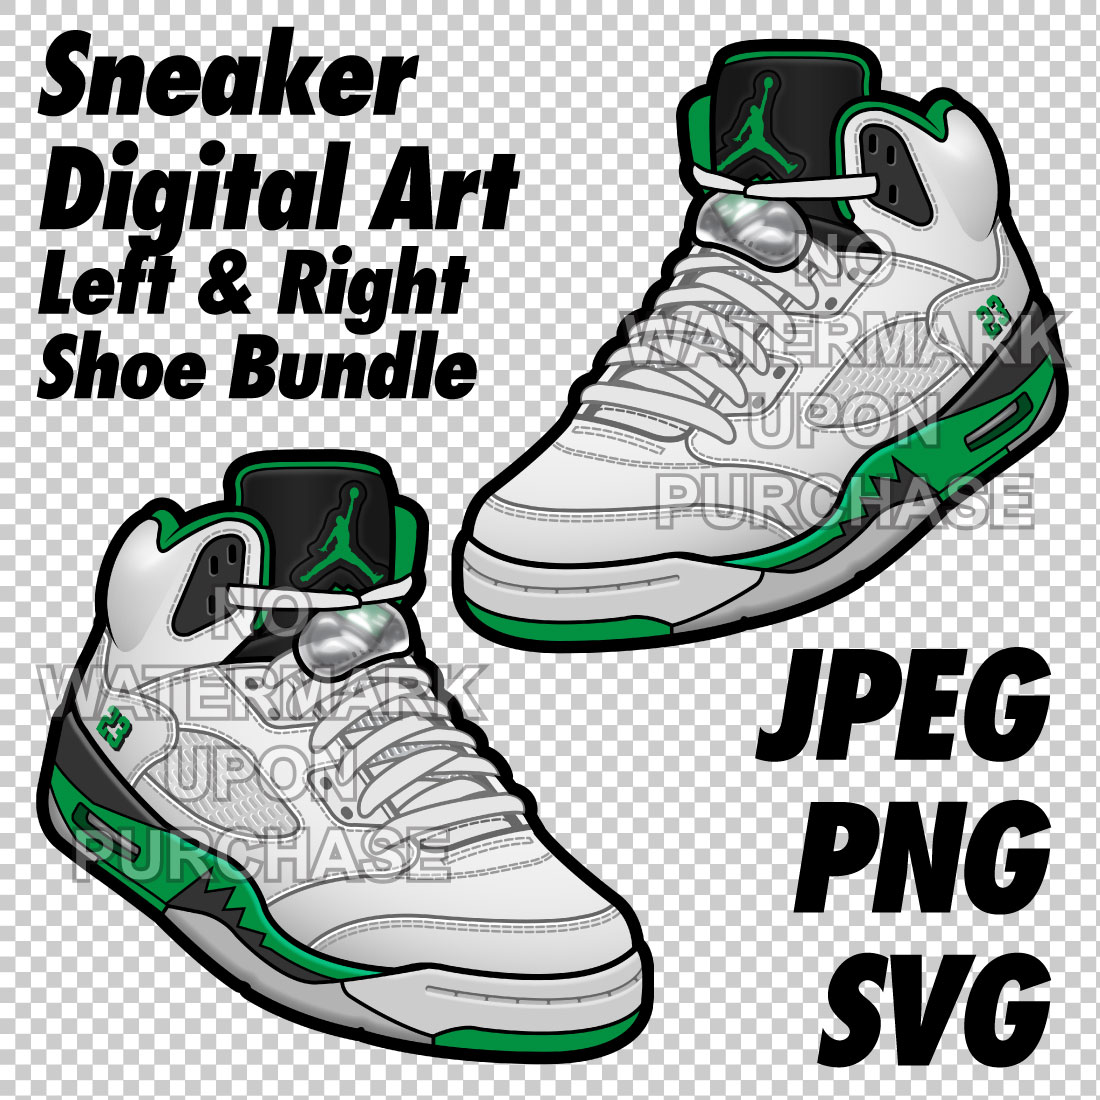 Air Jordan 5 Lucky Green JPEG PNG SVG right & left shoe bundle cover image.